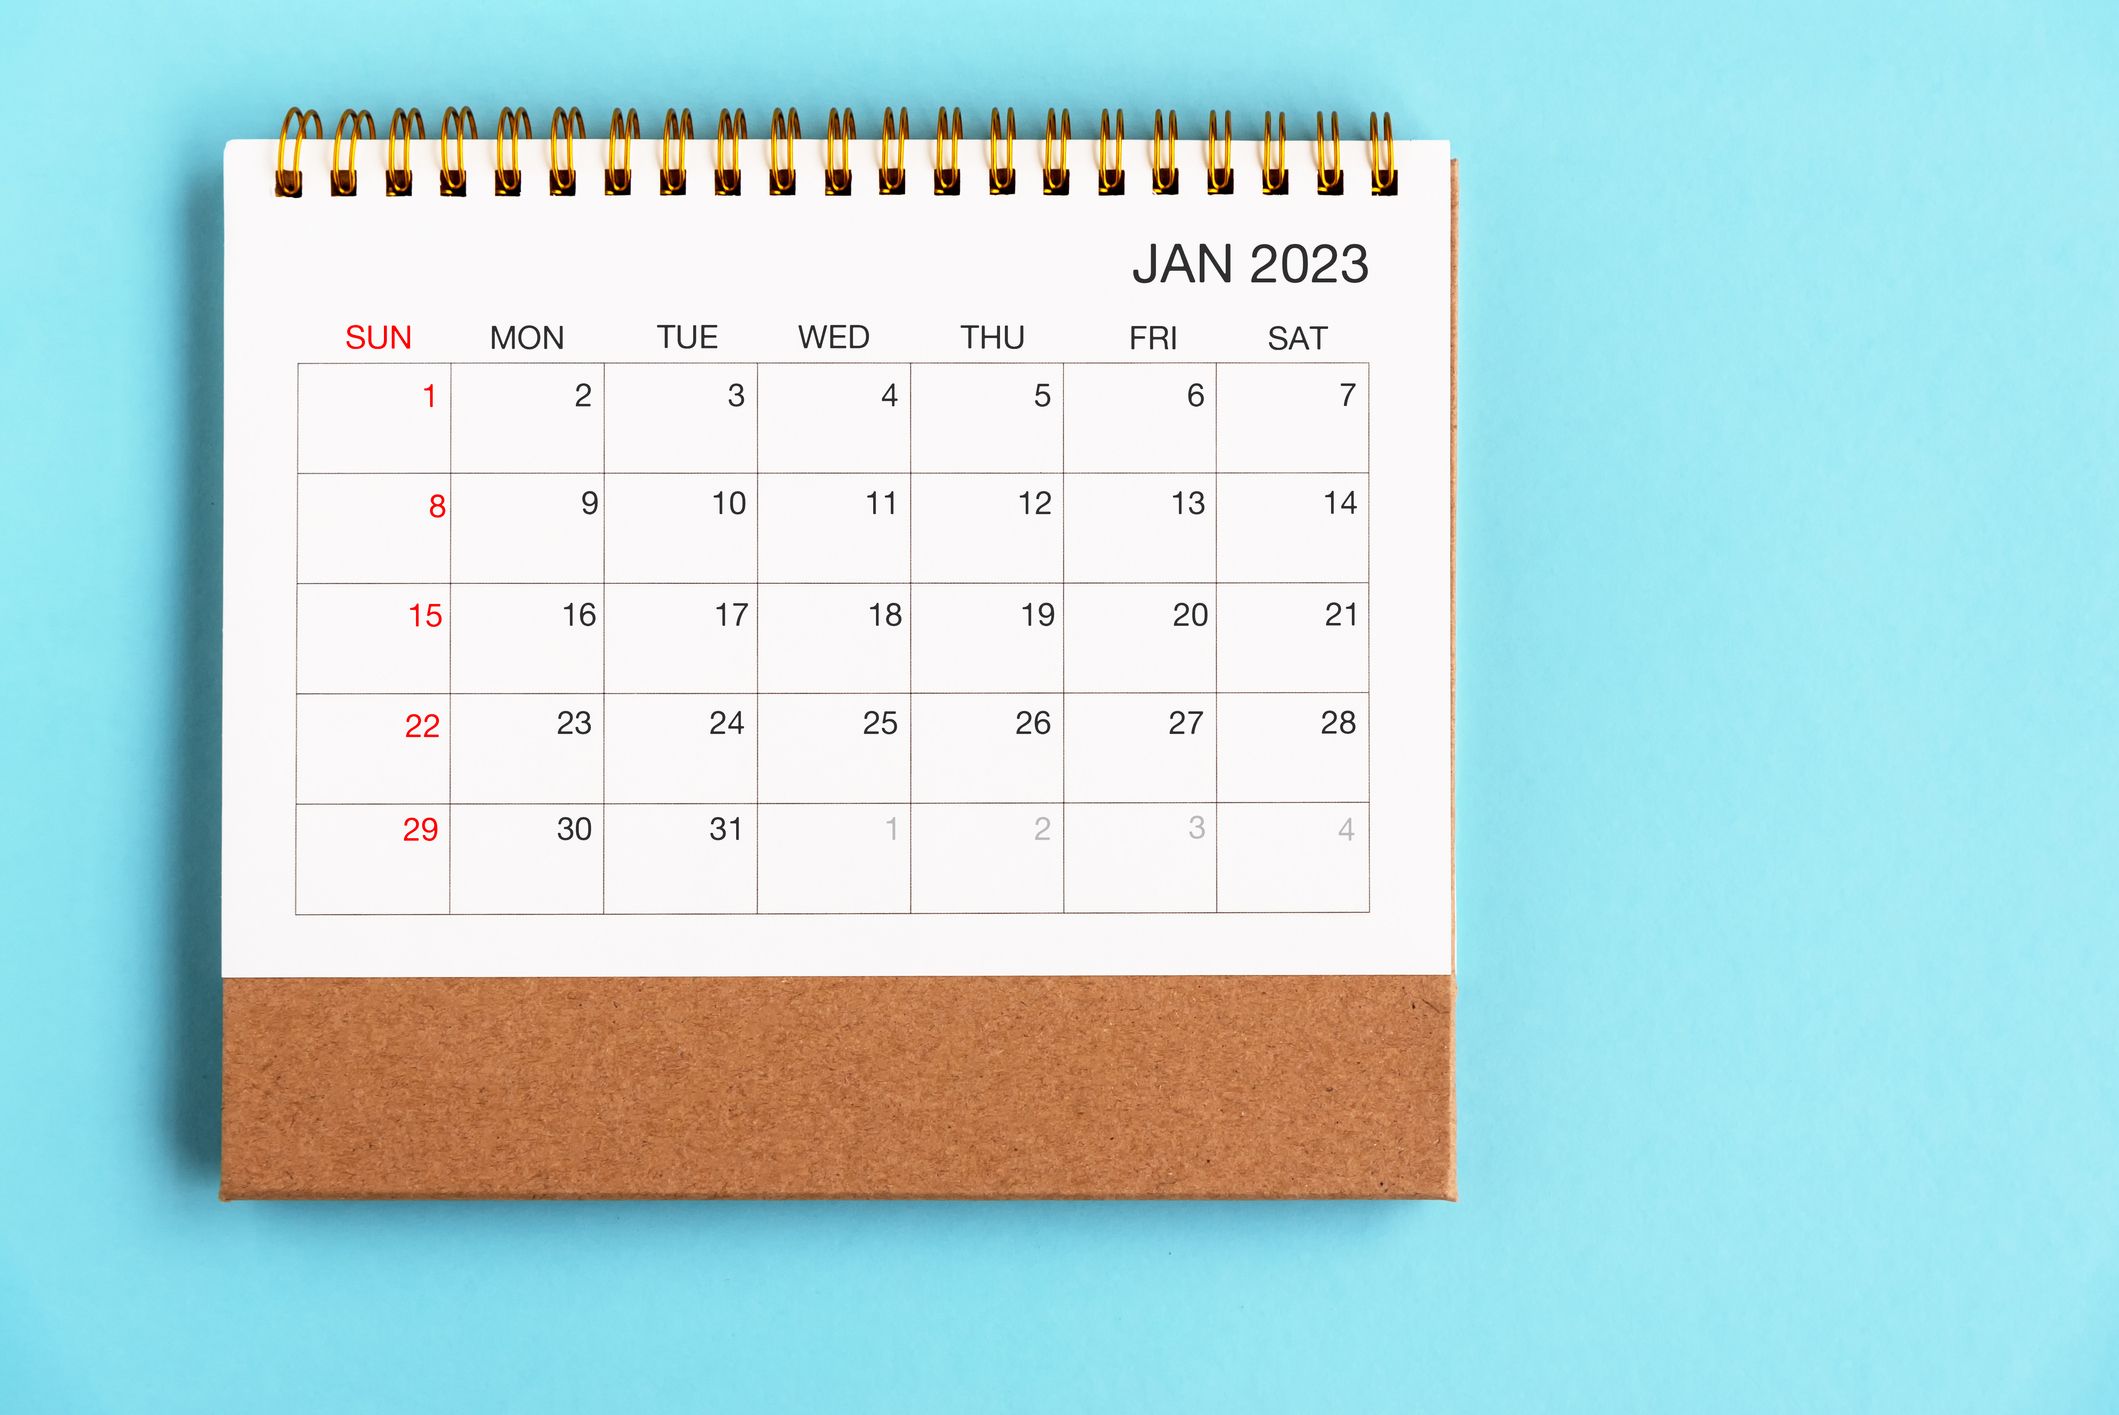 January Holidays and Observances 2023 - January Holiday Calendar